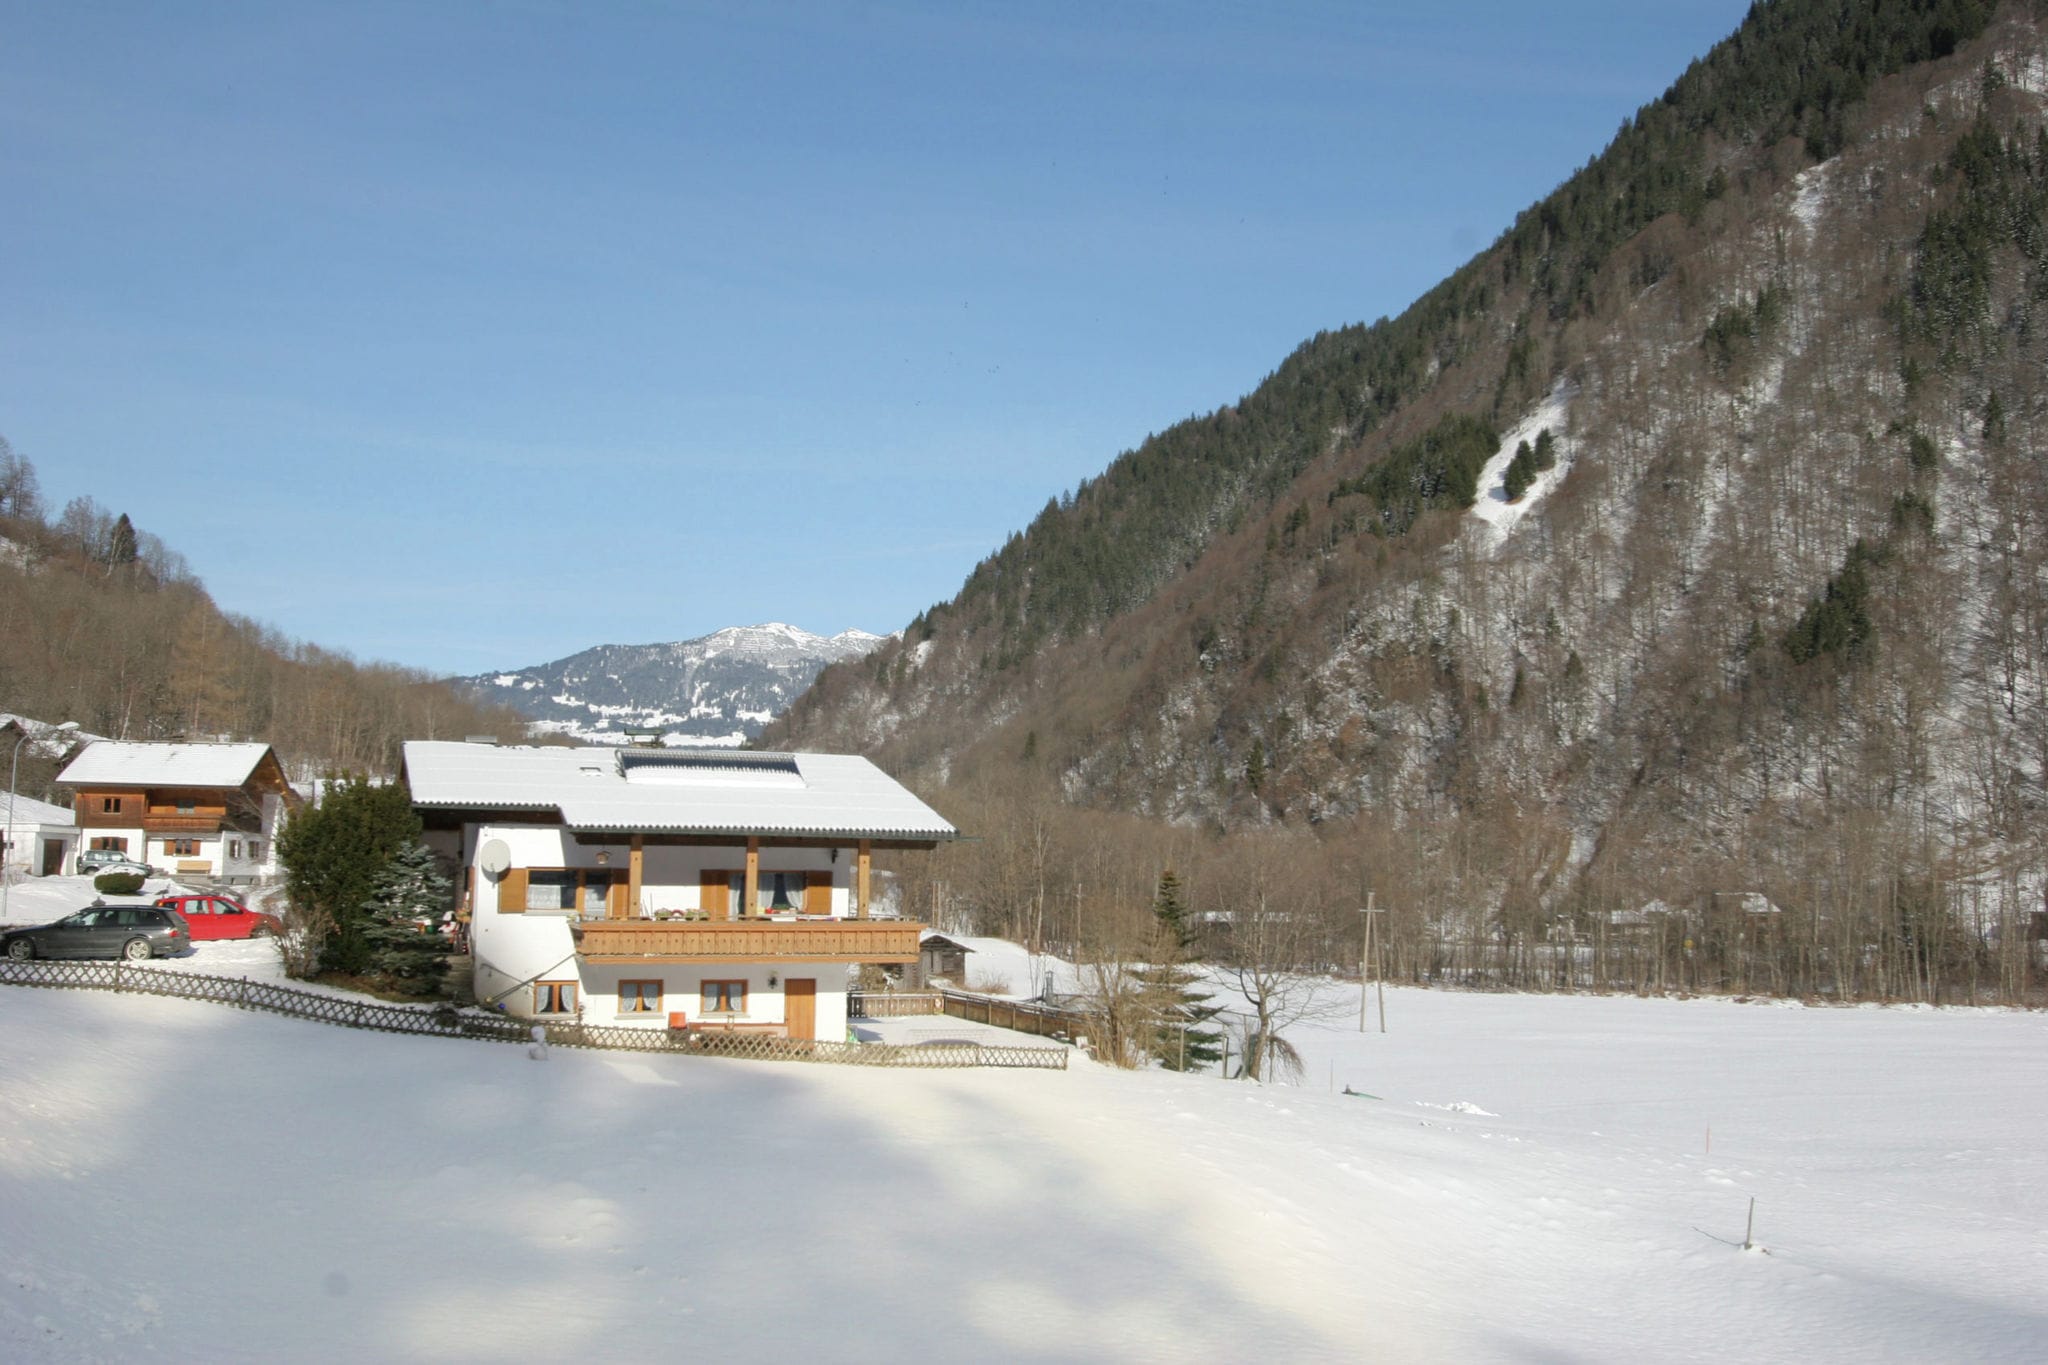 Apartment in St. Gallenkirch near ski area